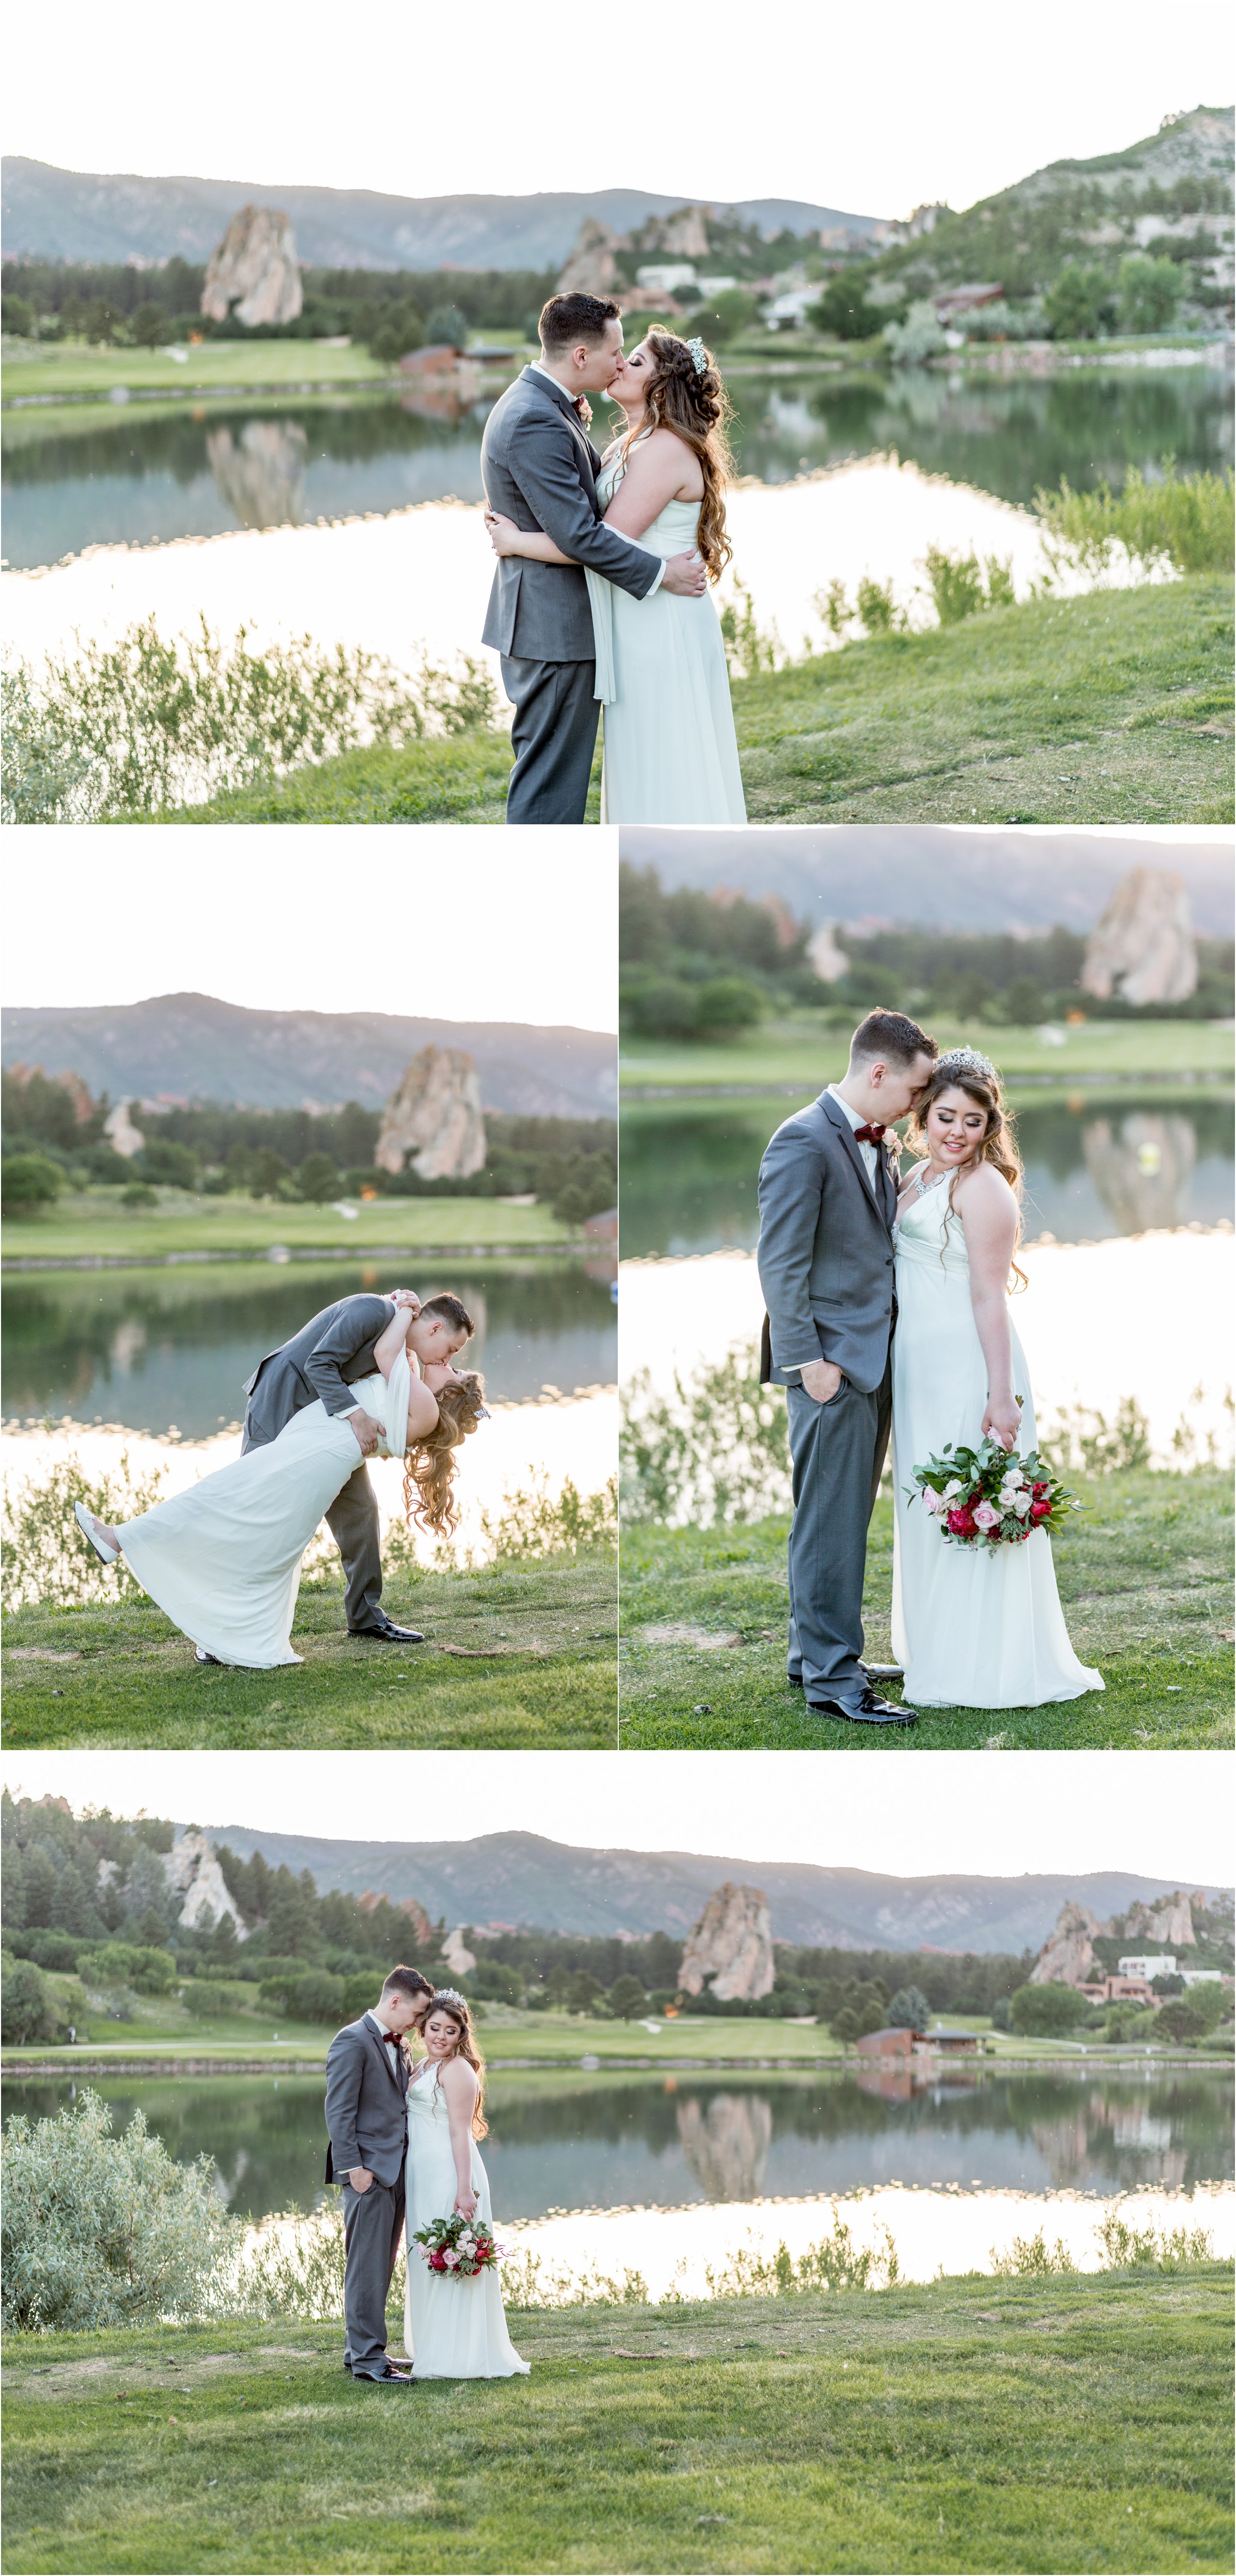 Perry Park Country Club Wedding near Larkspur, Colorado by Greeley, Colorado Wedding Photographer